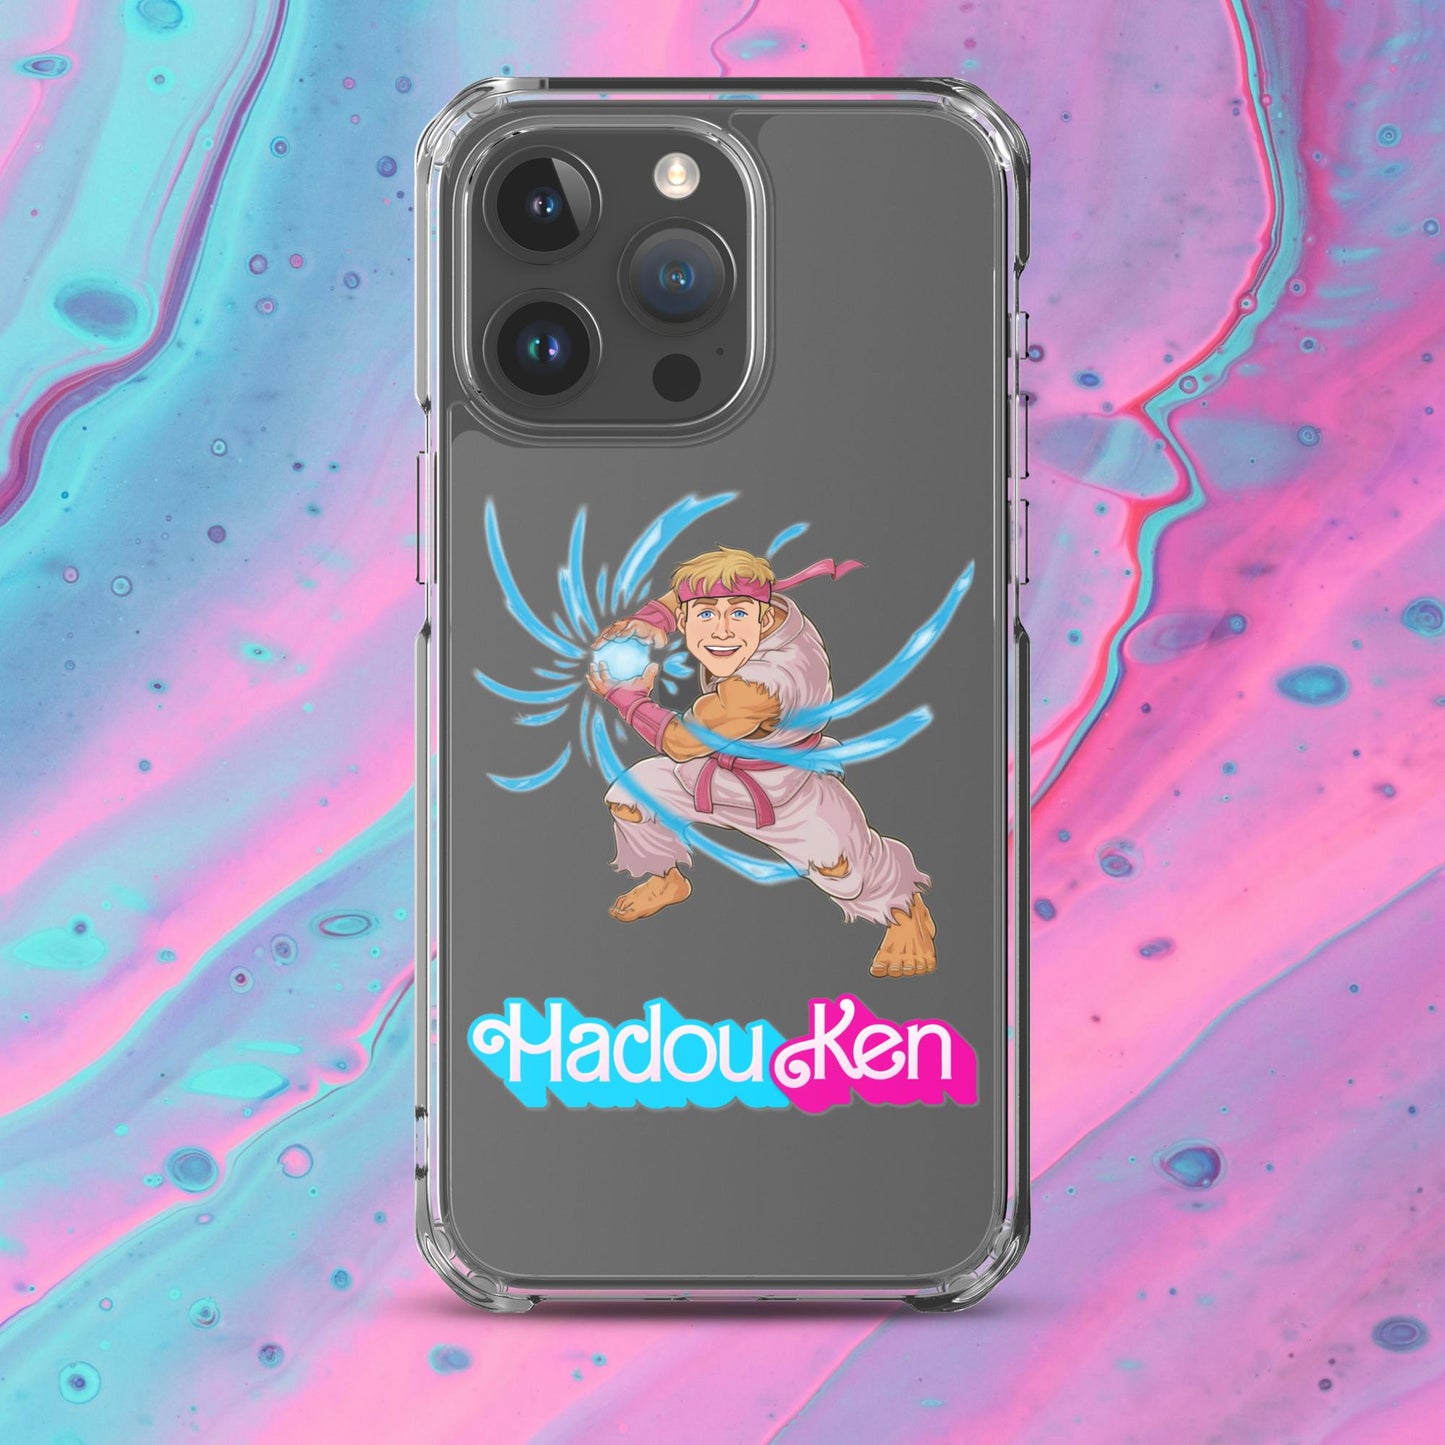 Hadouken Ken Barbie Ryan Gosling Street Fighter Funny Clear Case for iPhone